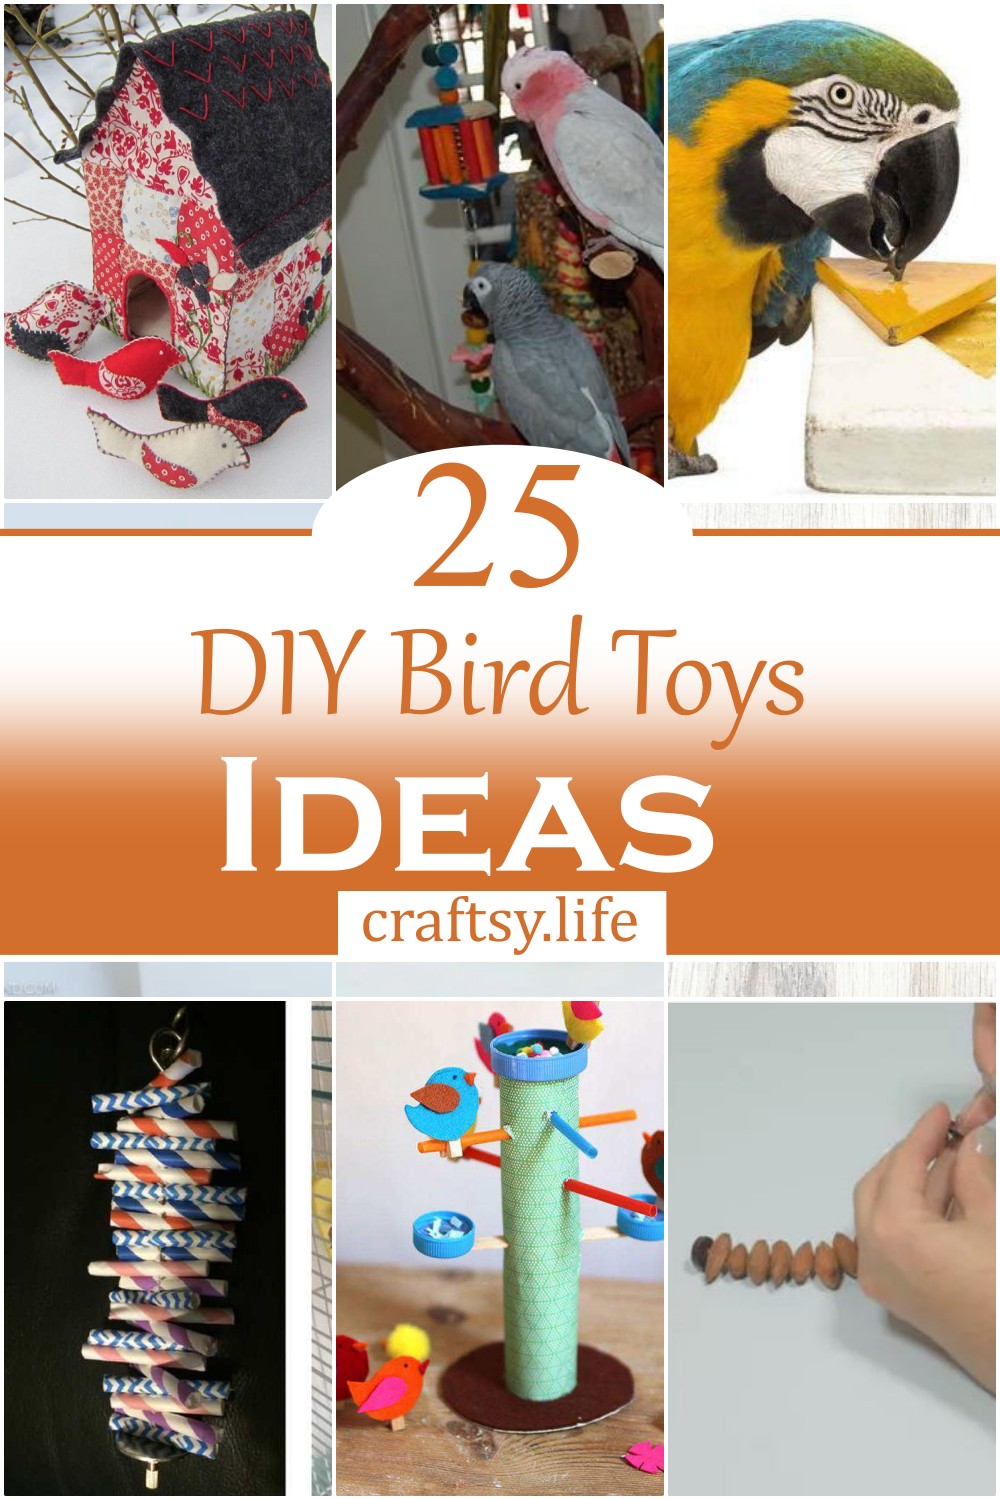 DIY Bird Toys Ideas